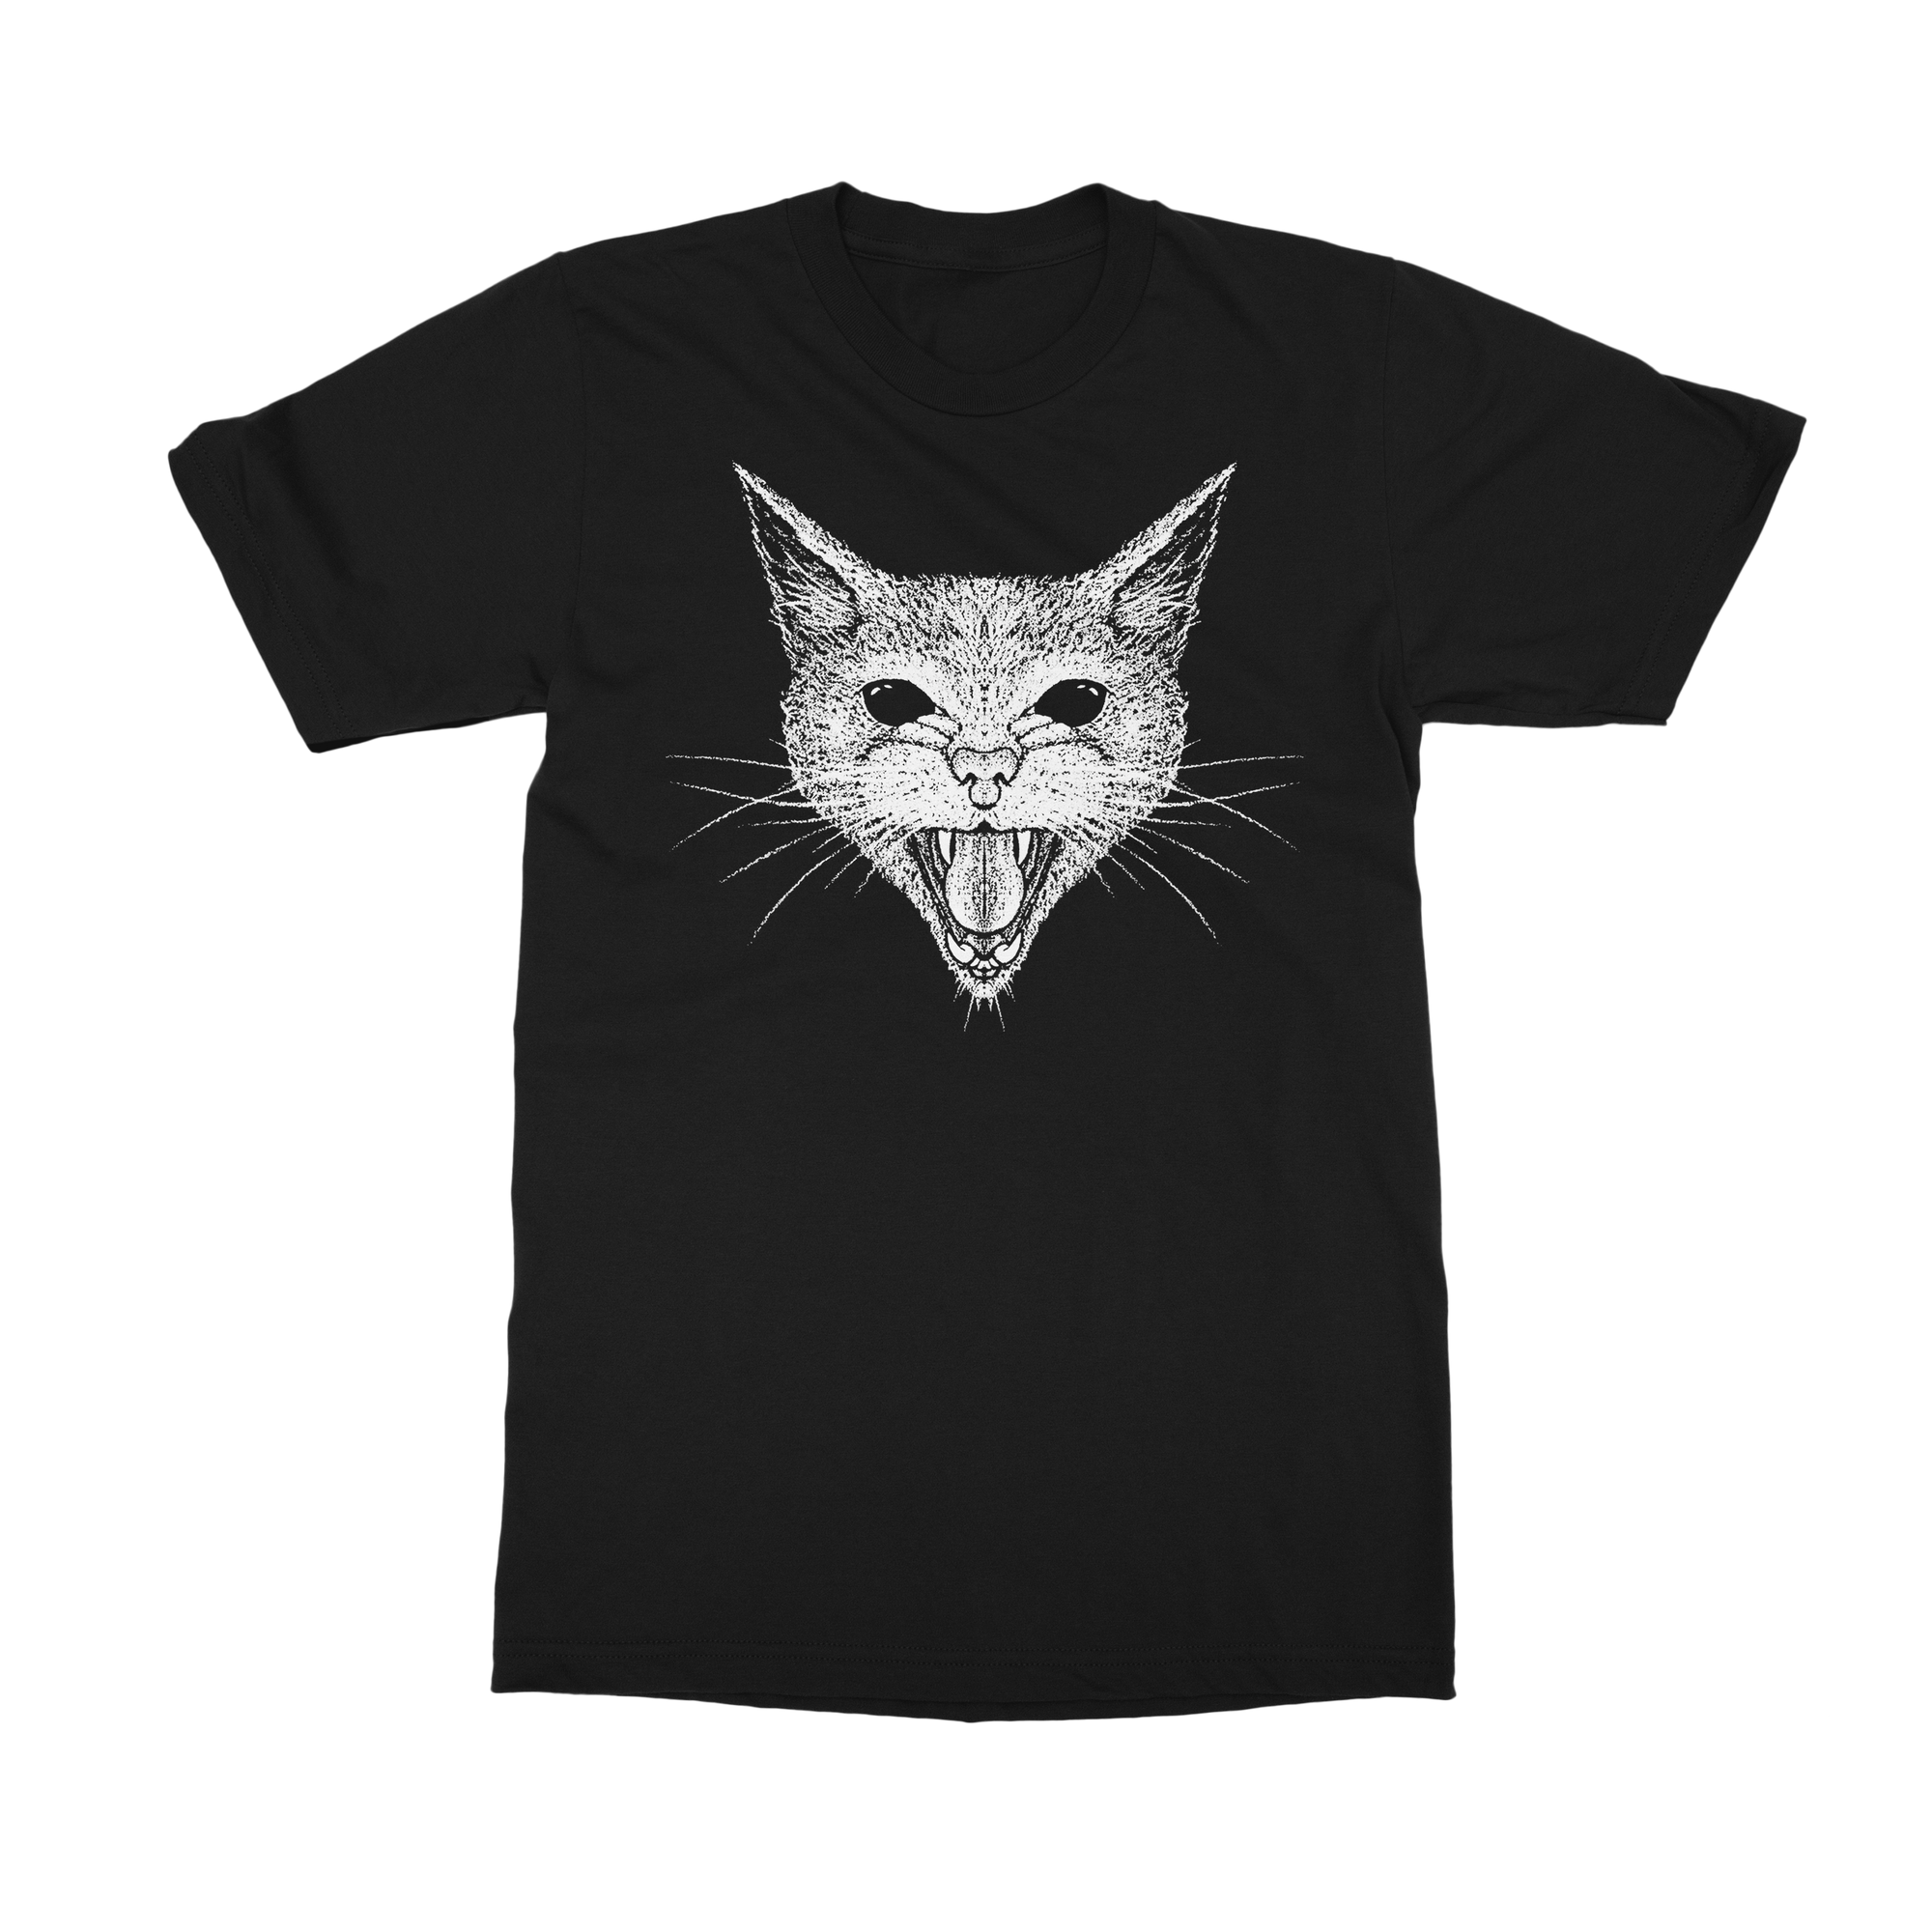 The Cat T-Shirt by Dylan Garrett Smith